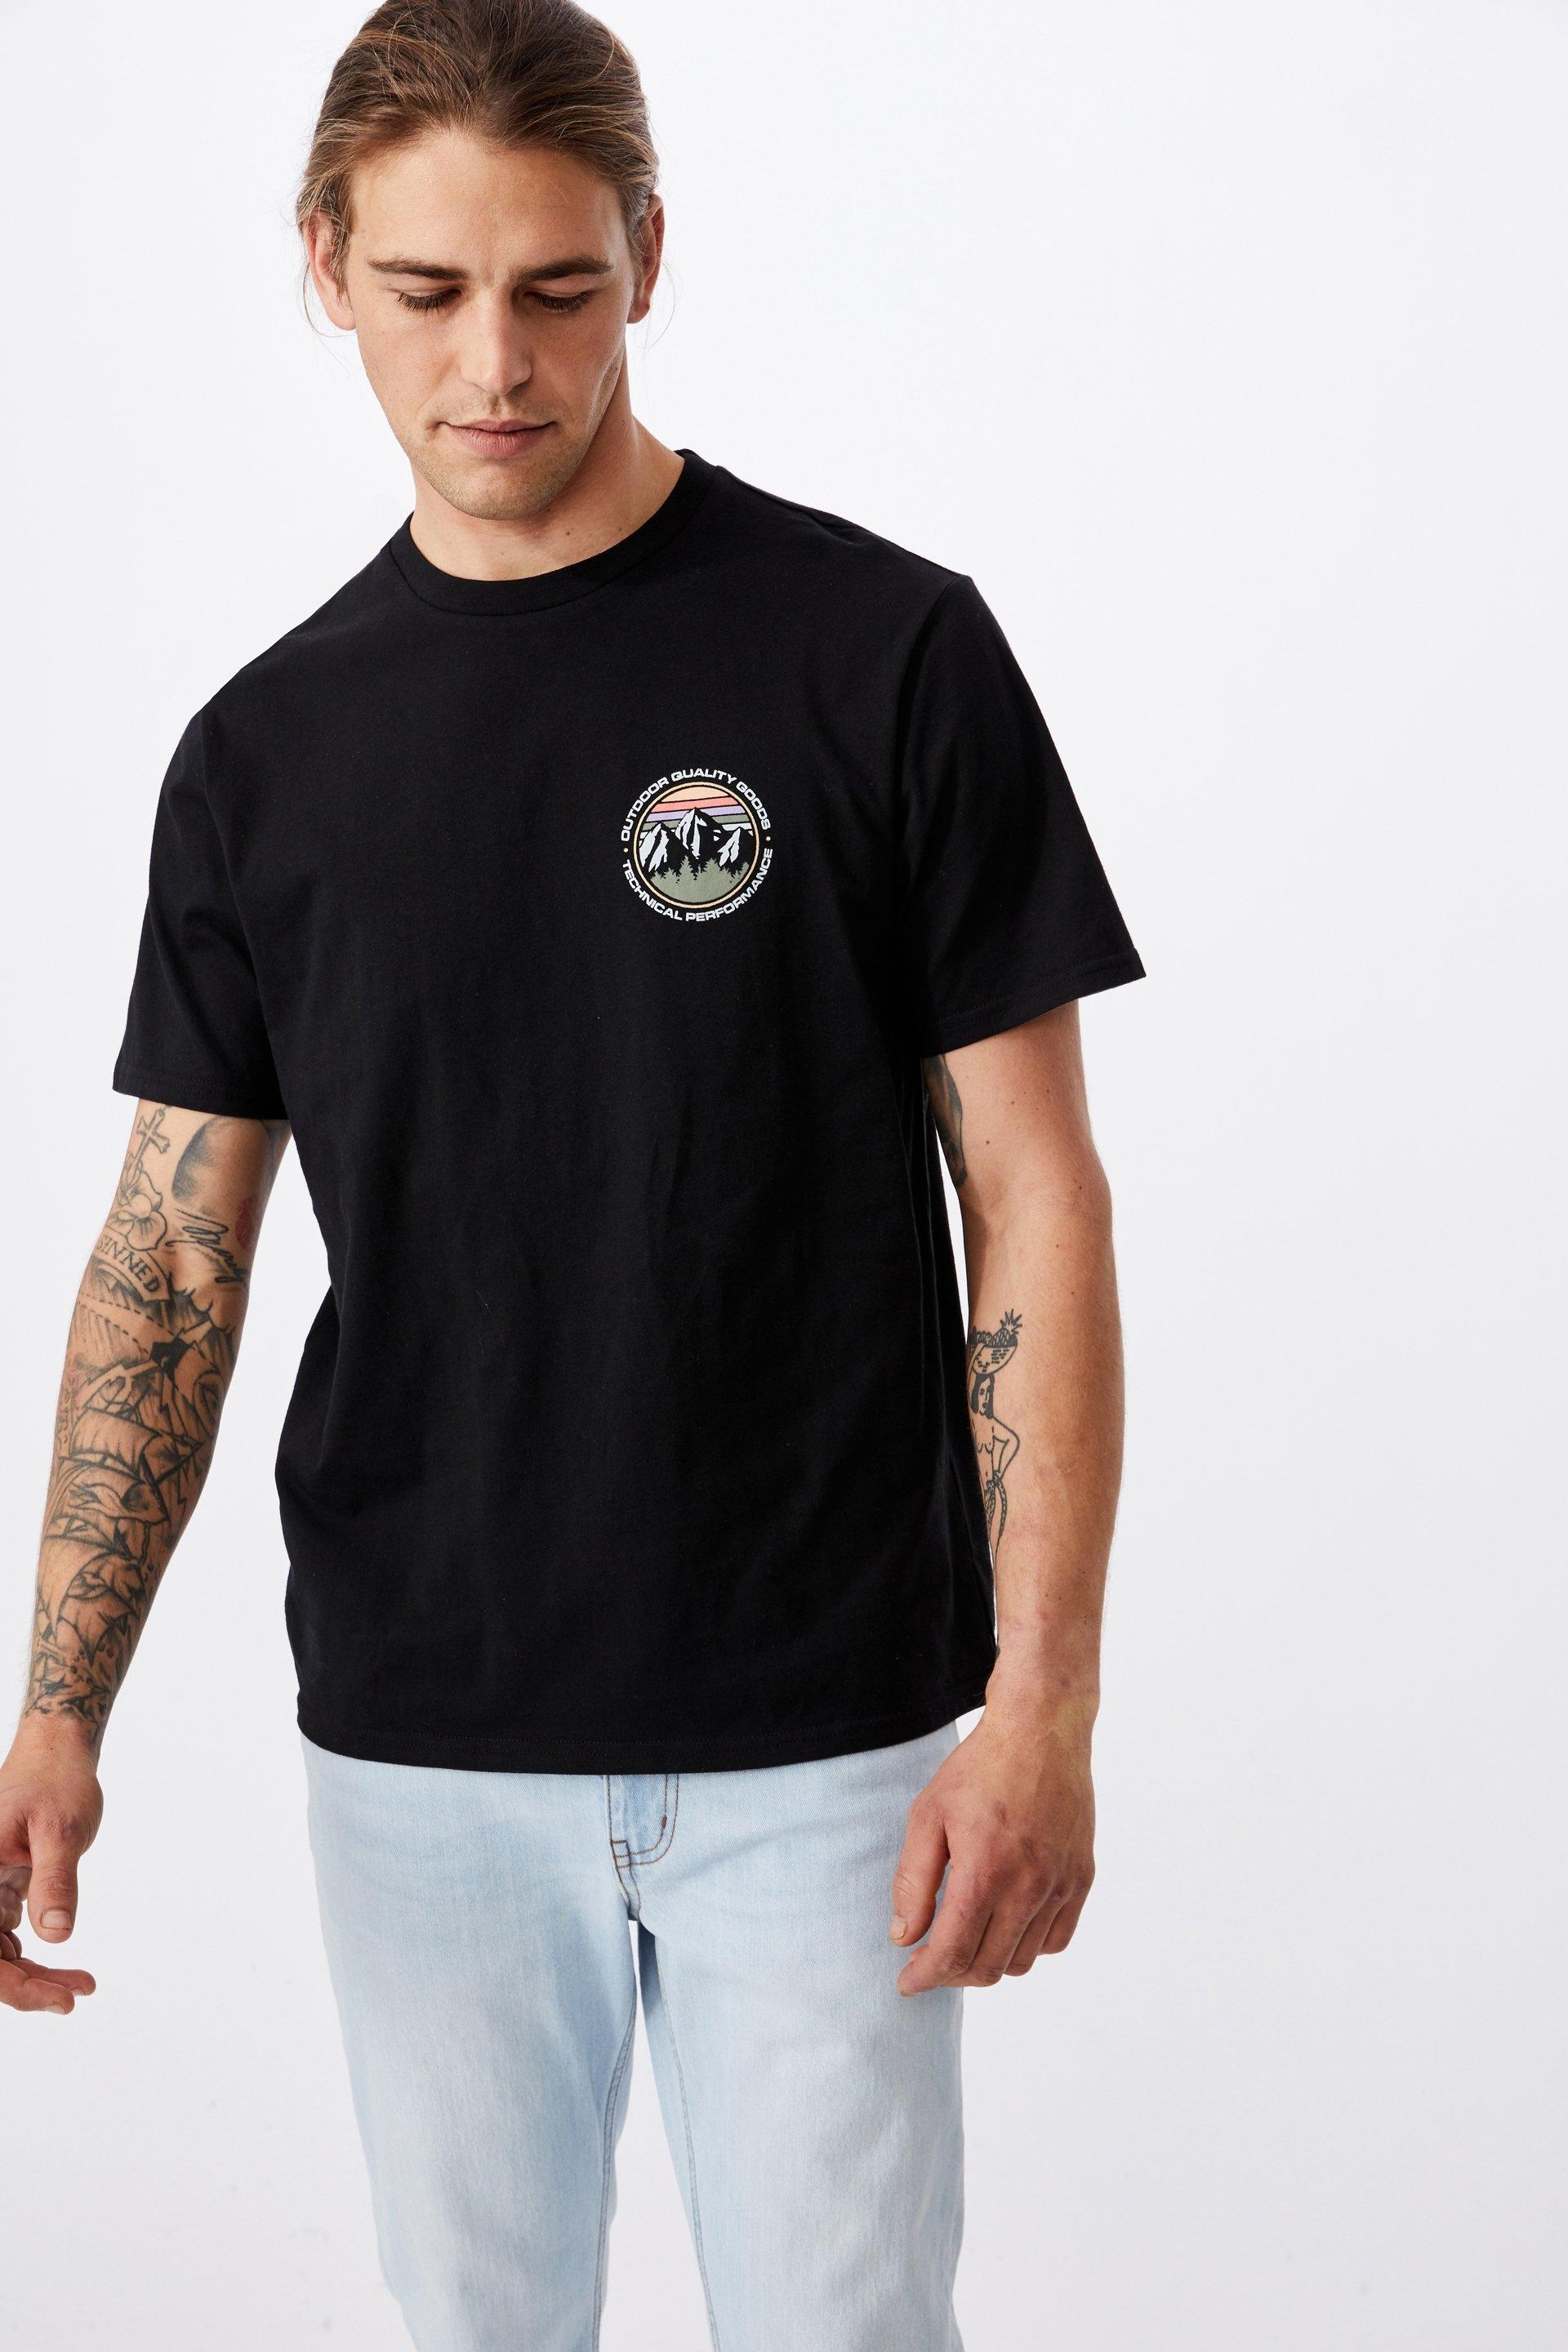 Outdoor quality goods tbar souvenir t-shirt - black Cotton On T-Shirts ...